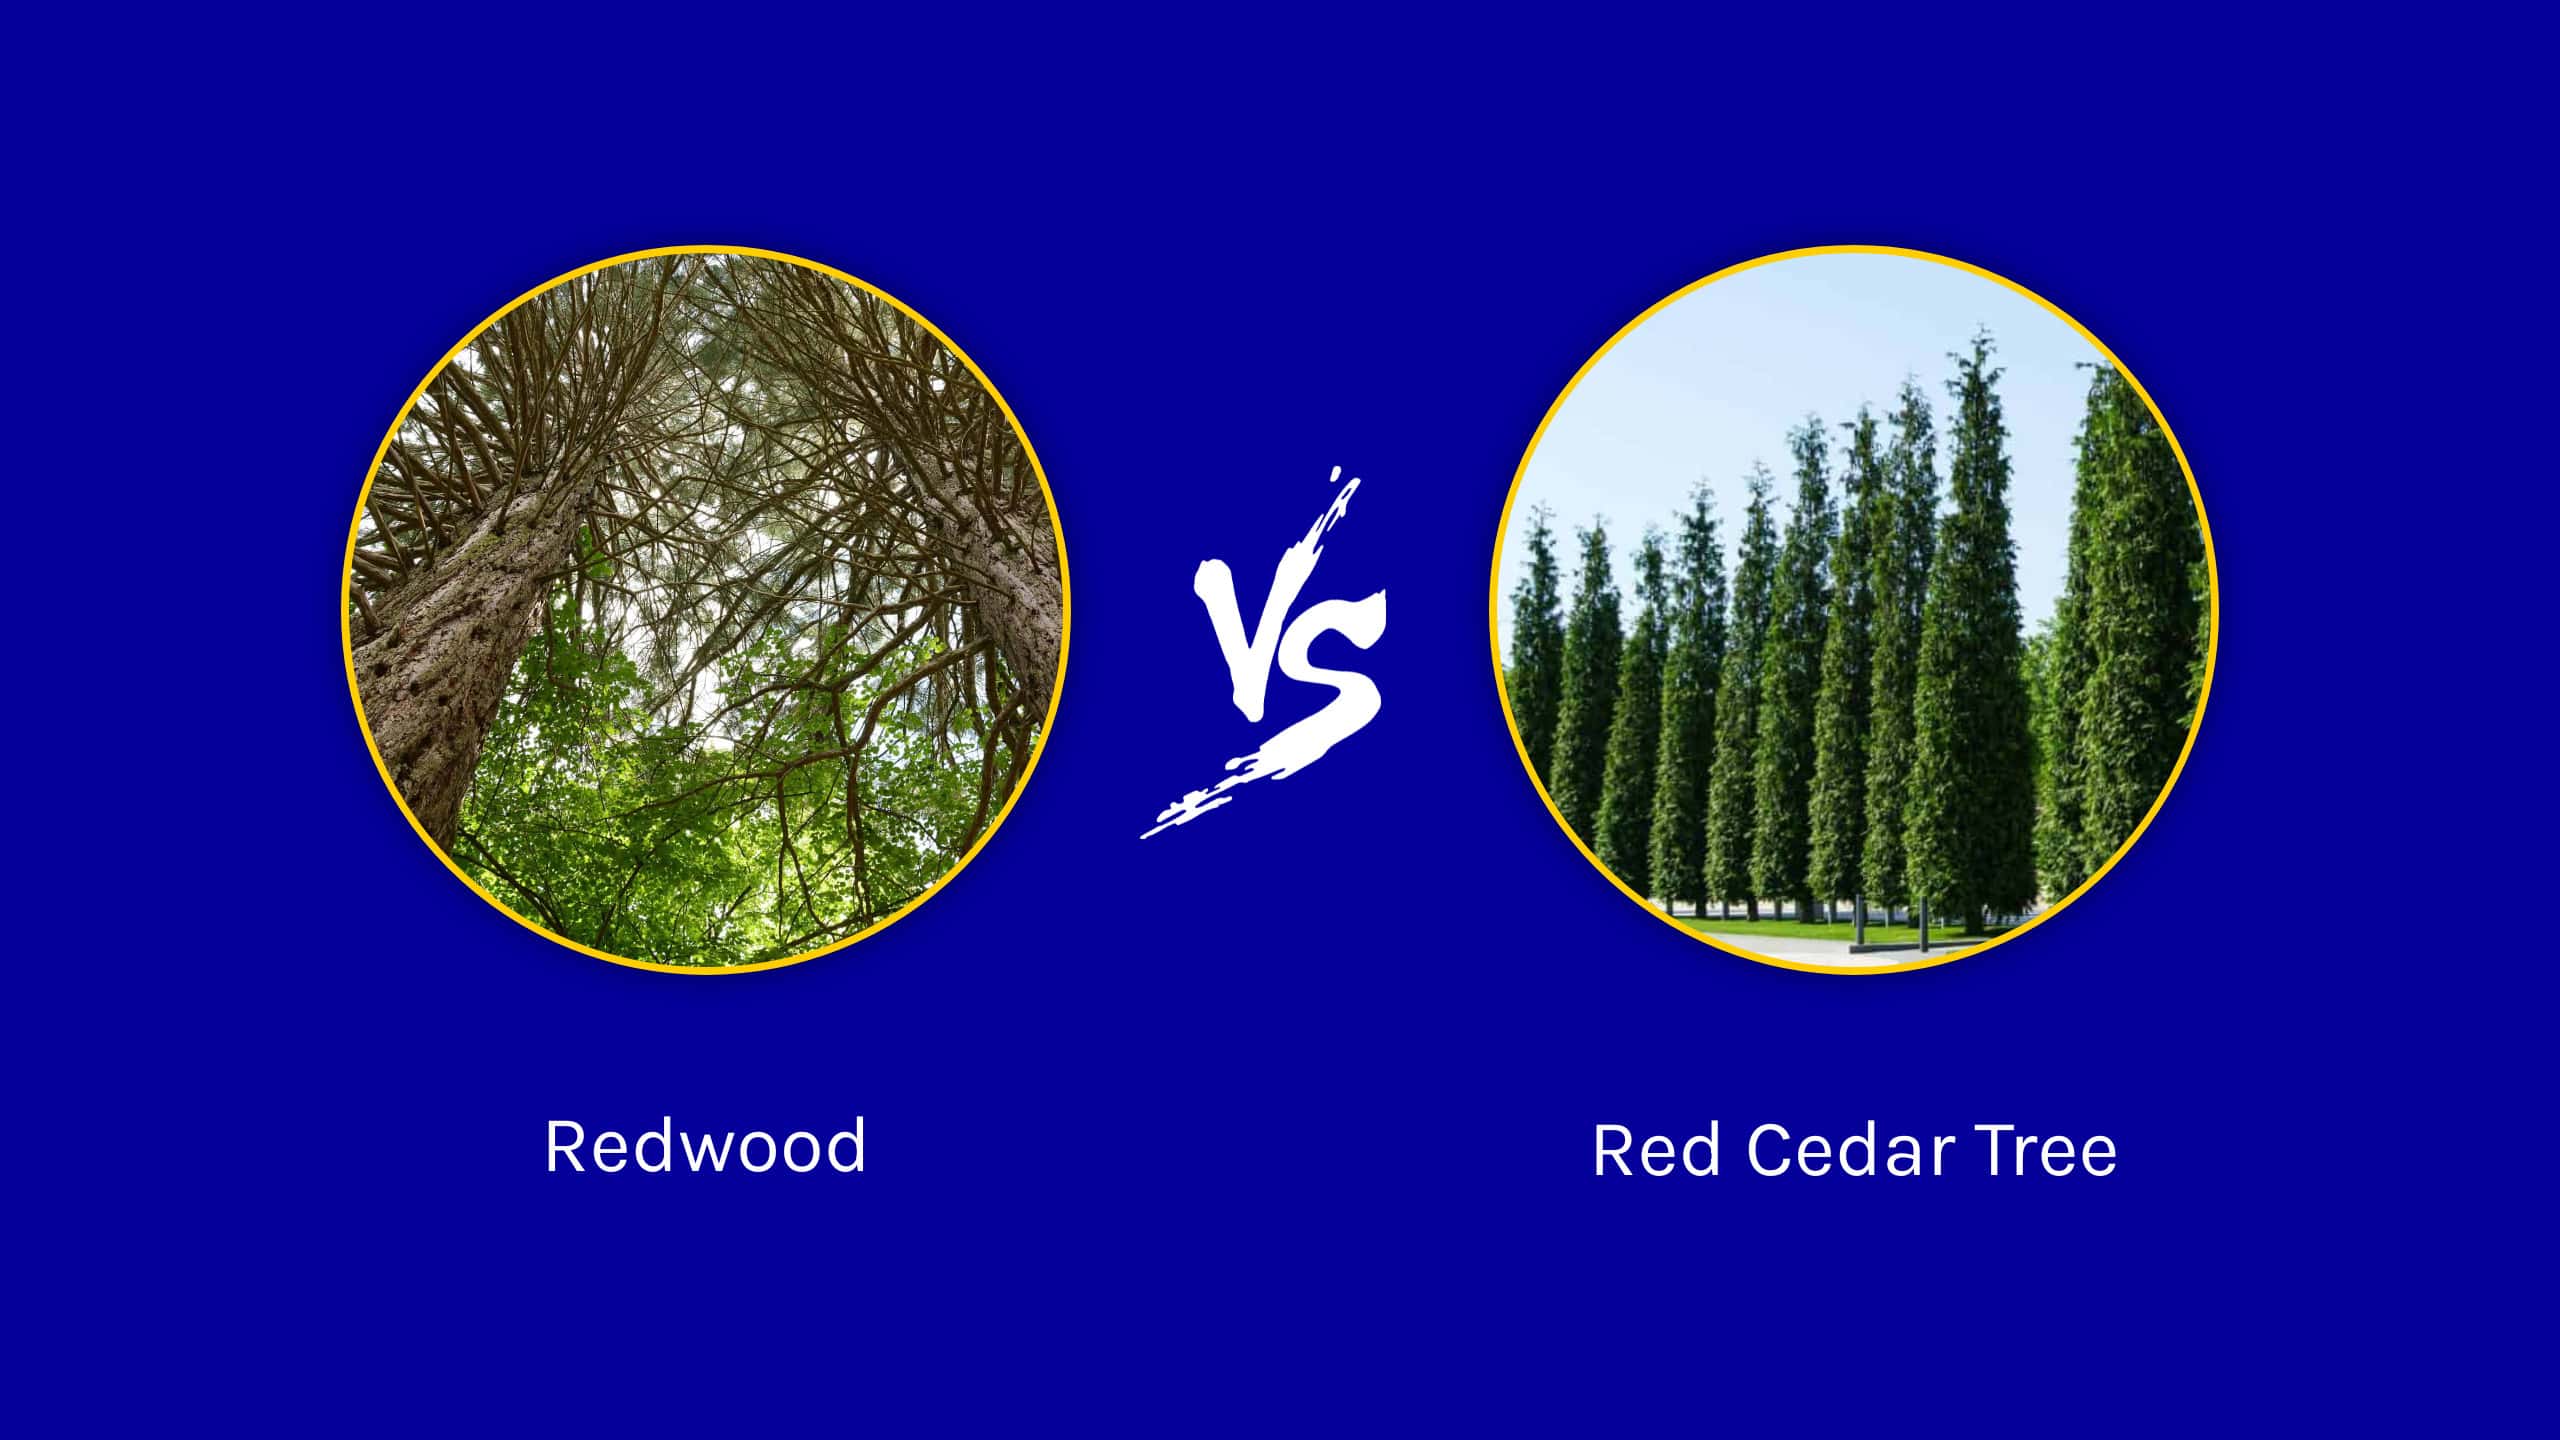 Redwood vs. red cedar tree